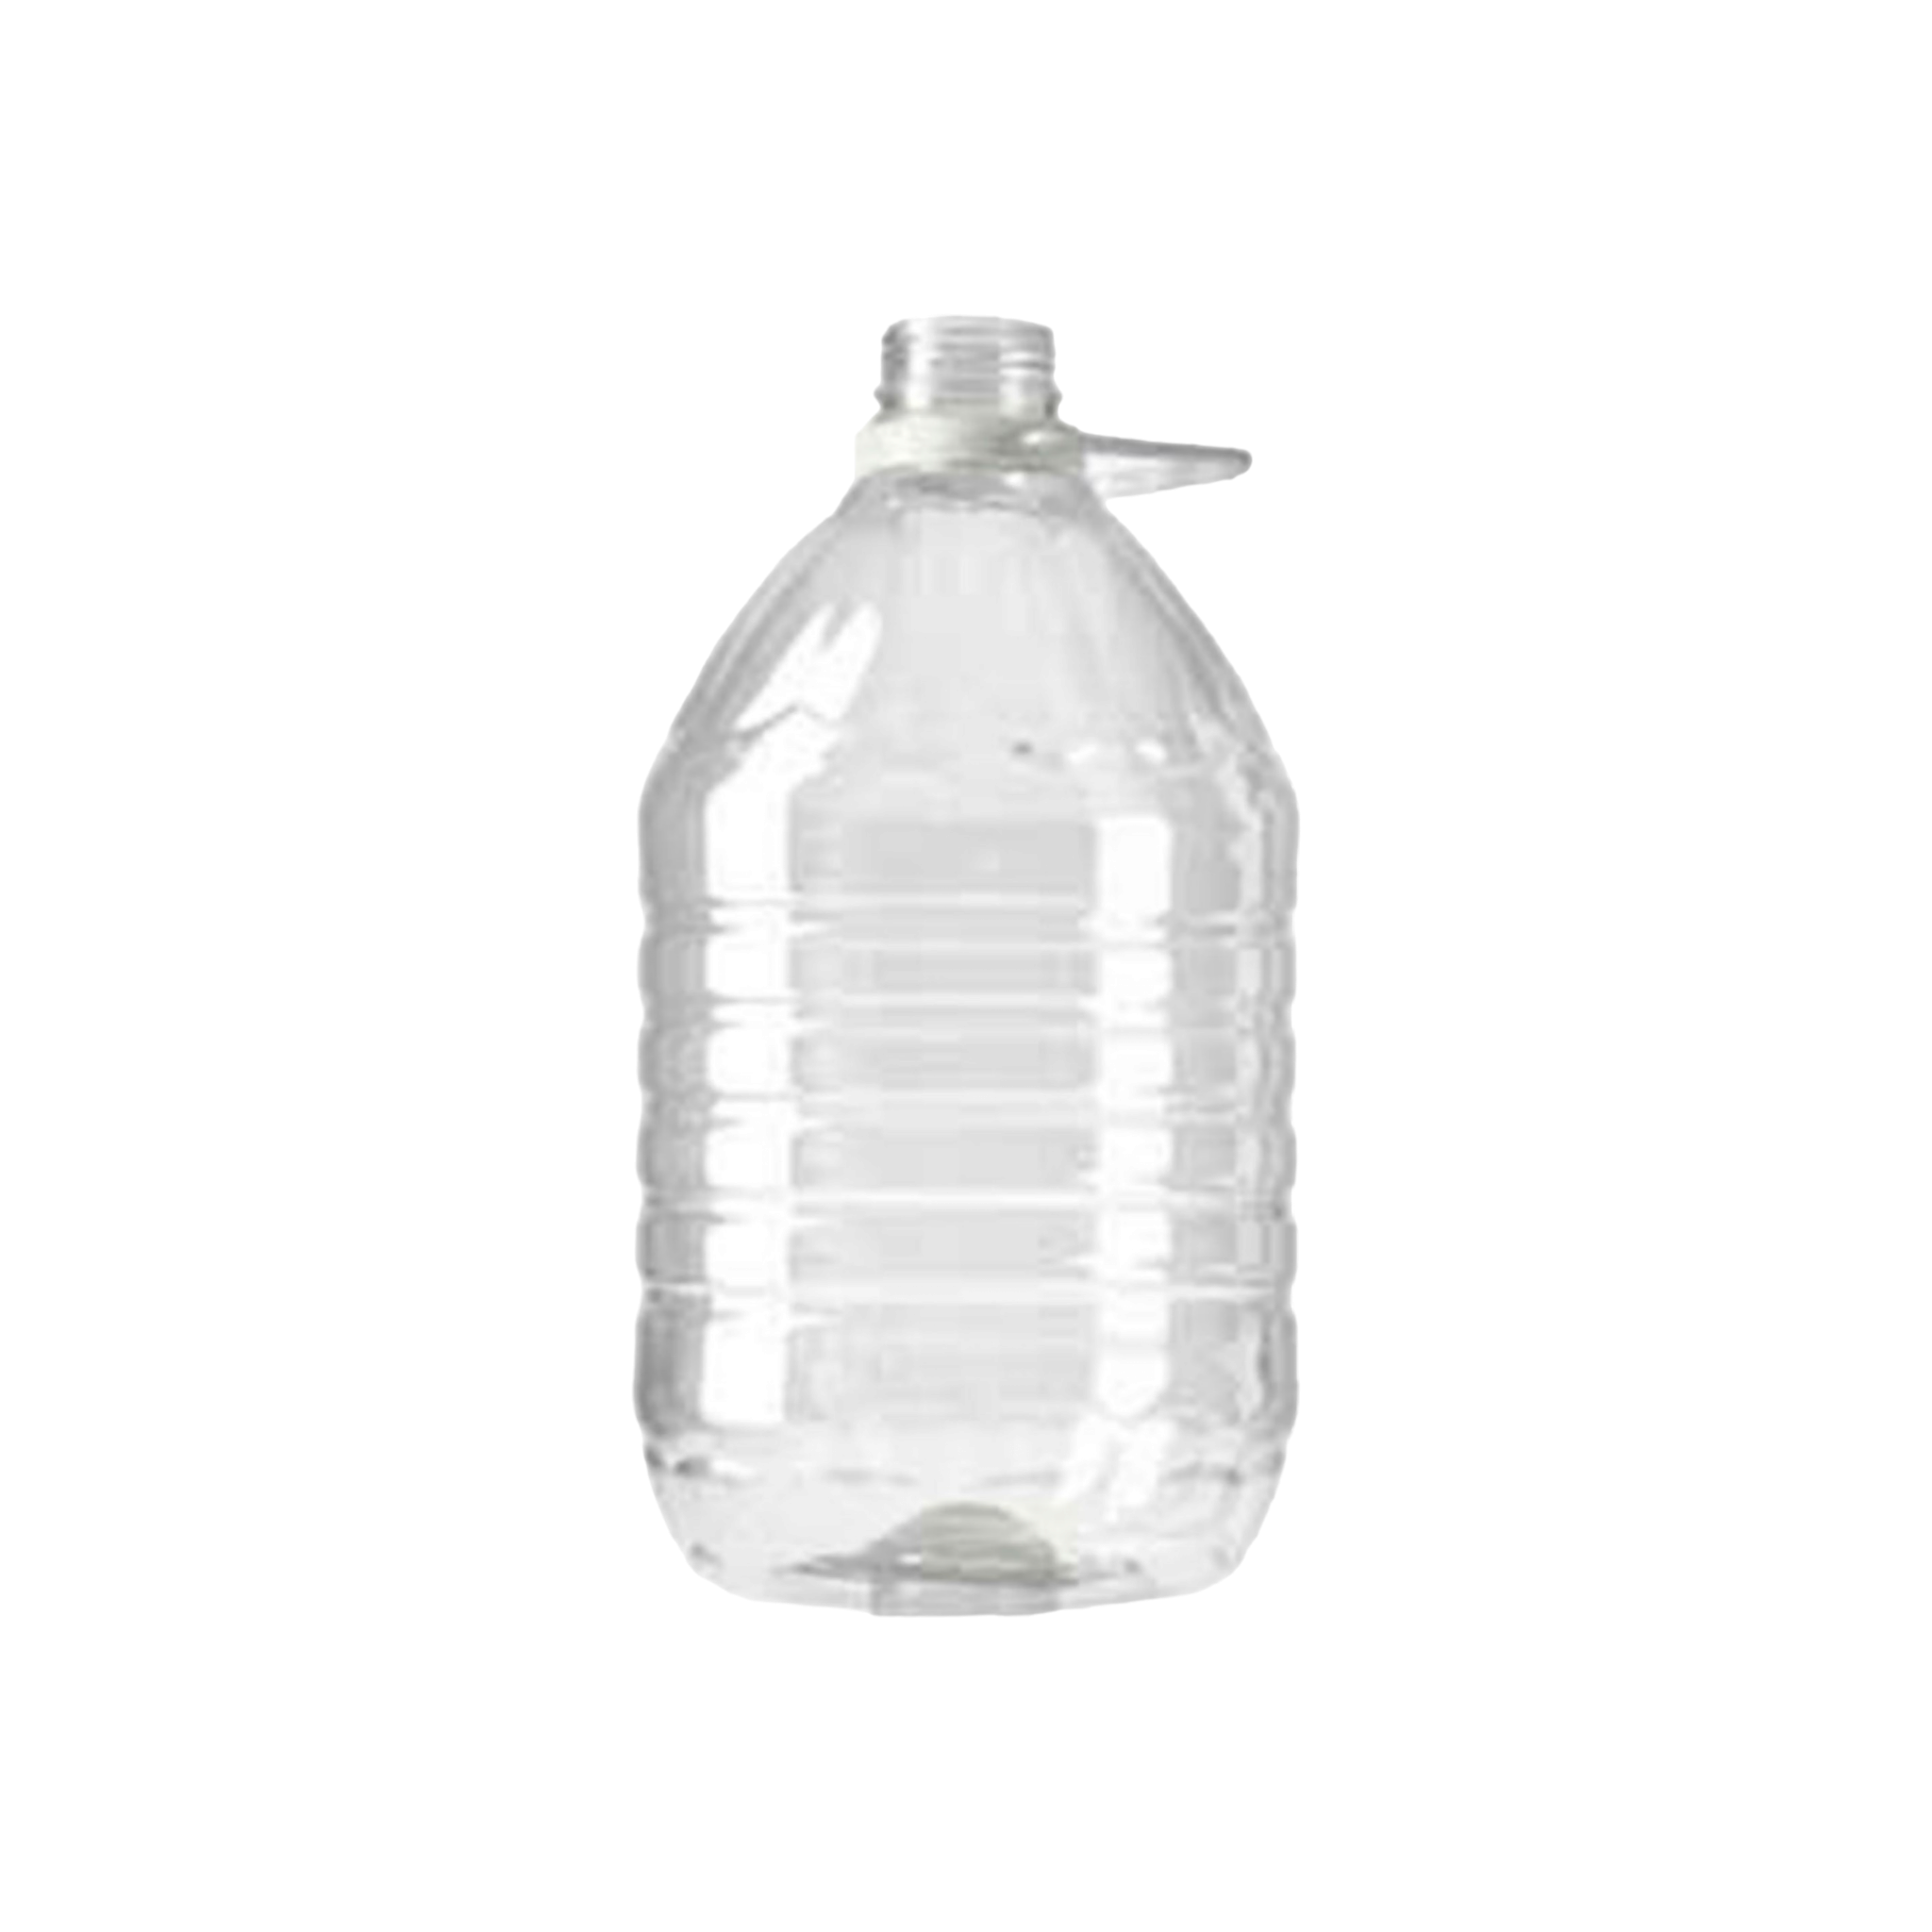 5L Plastic Water Bottle Grip Design with Tag Handle & Cap